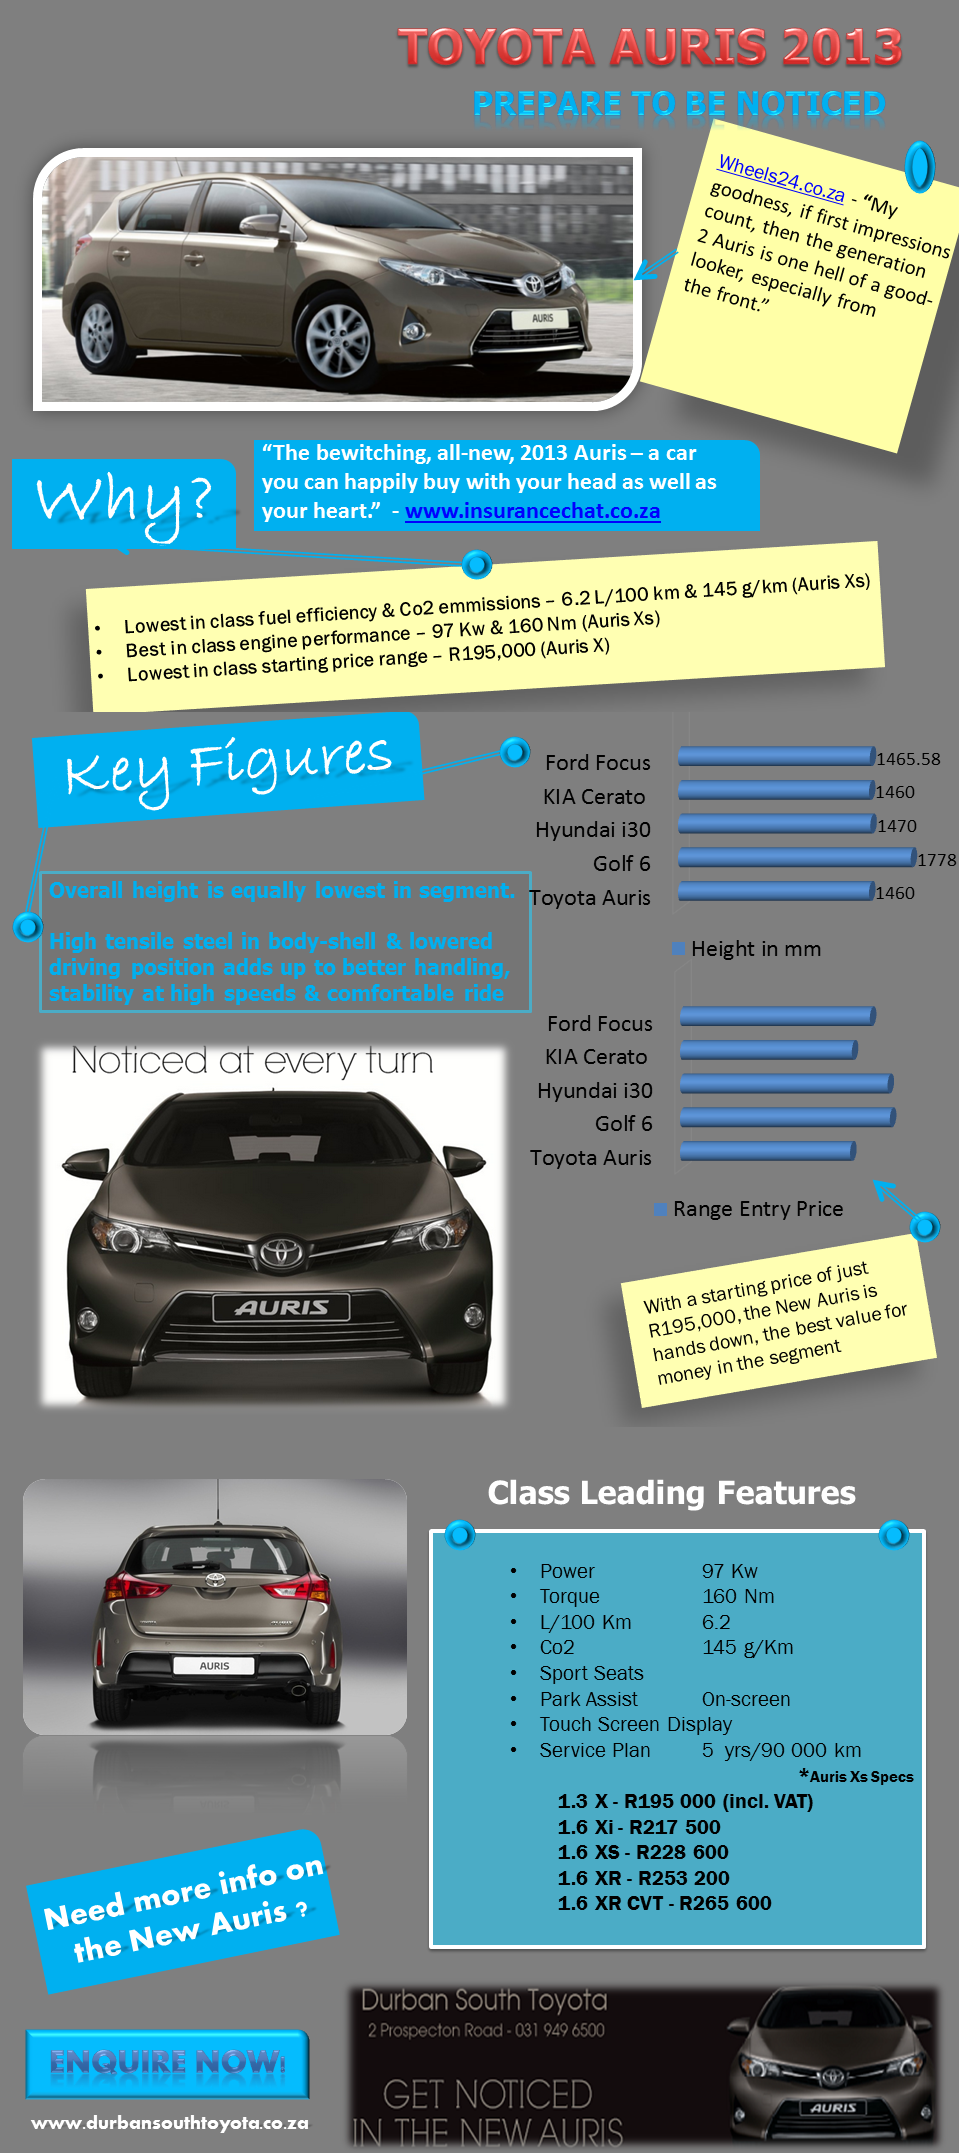 Toyota Auris 2013 Infographic